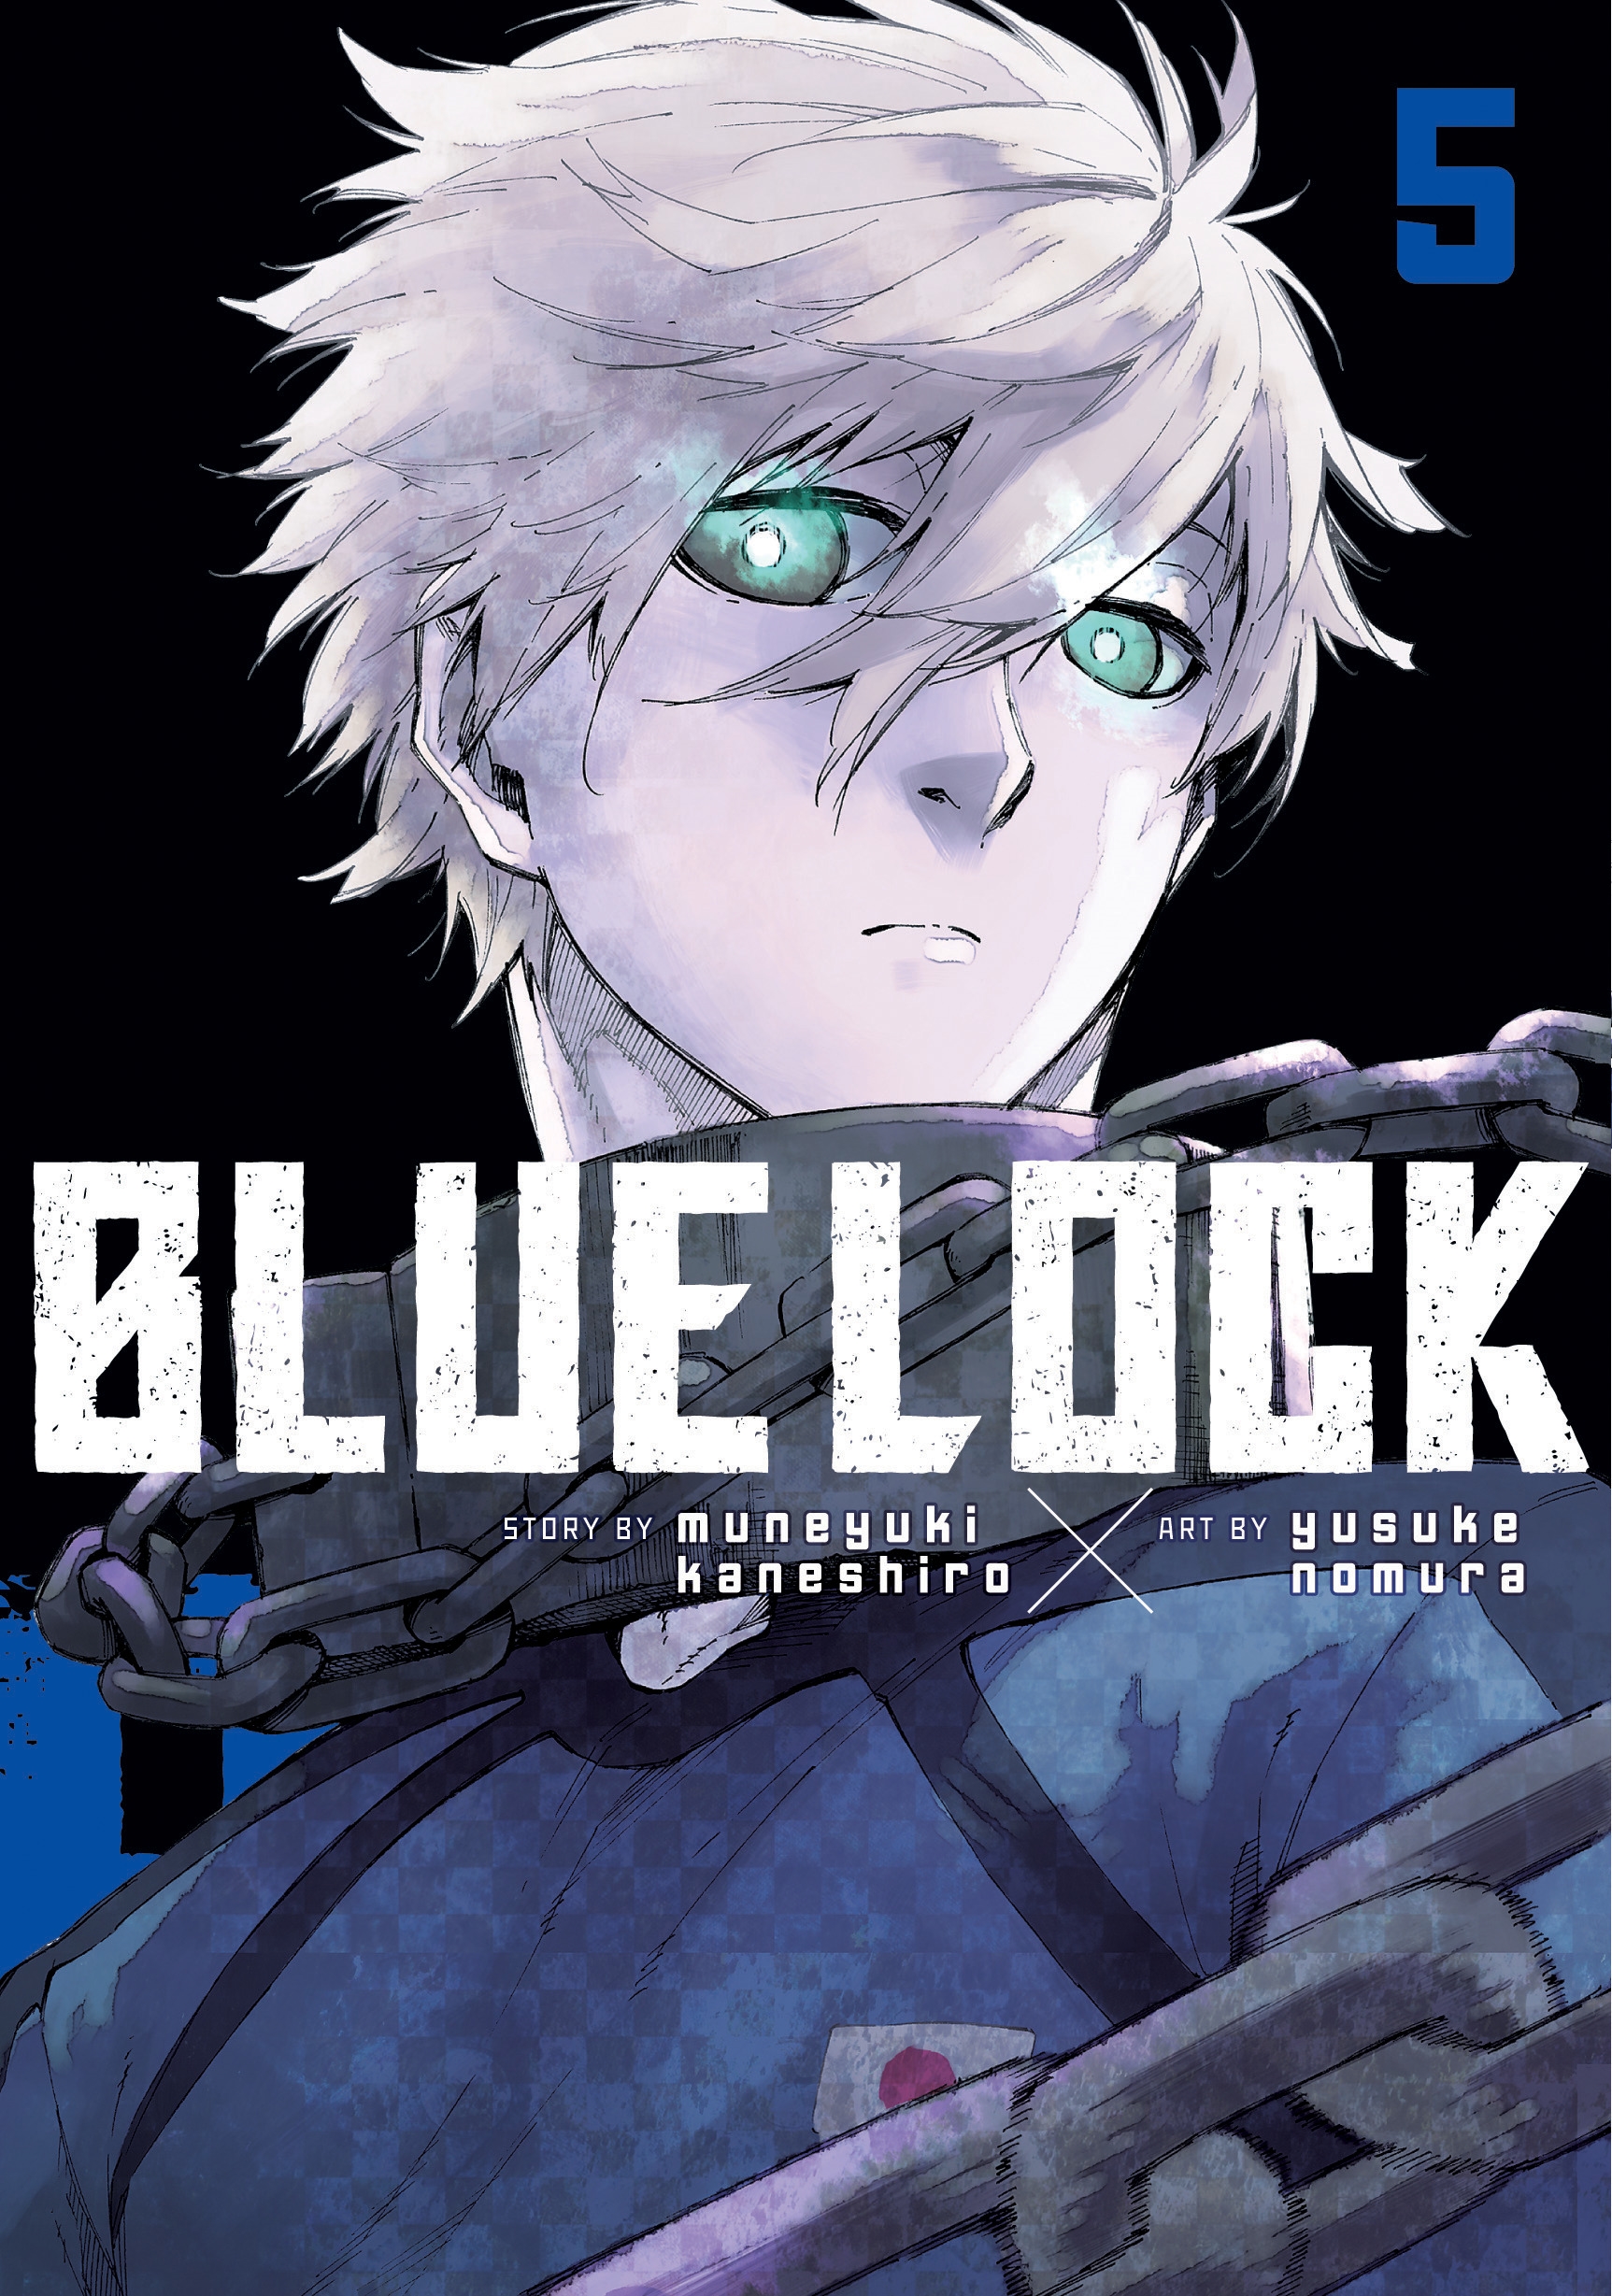 Blue Lock Manga Volume 11